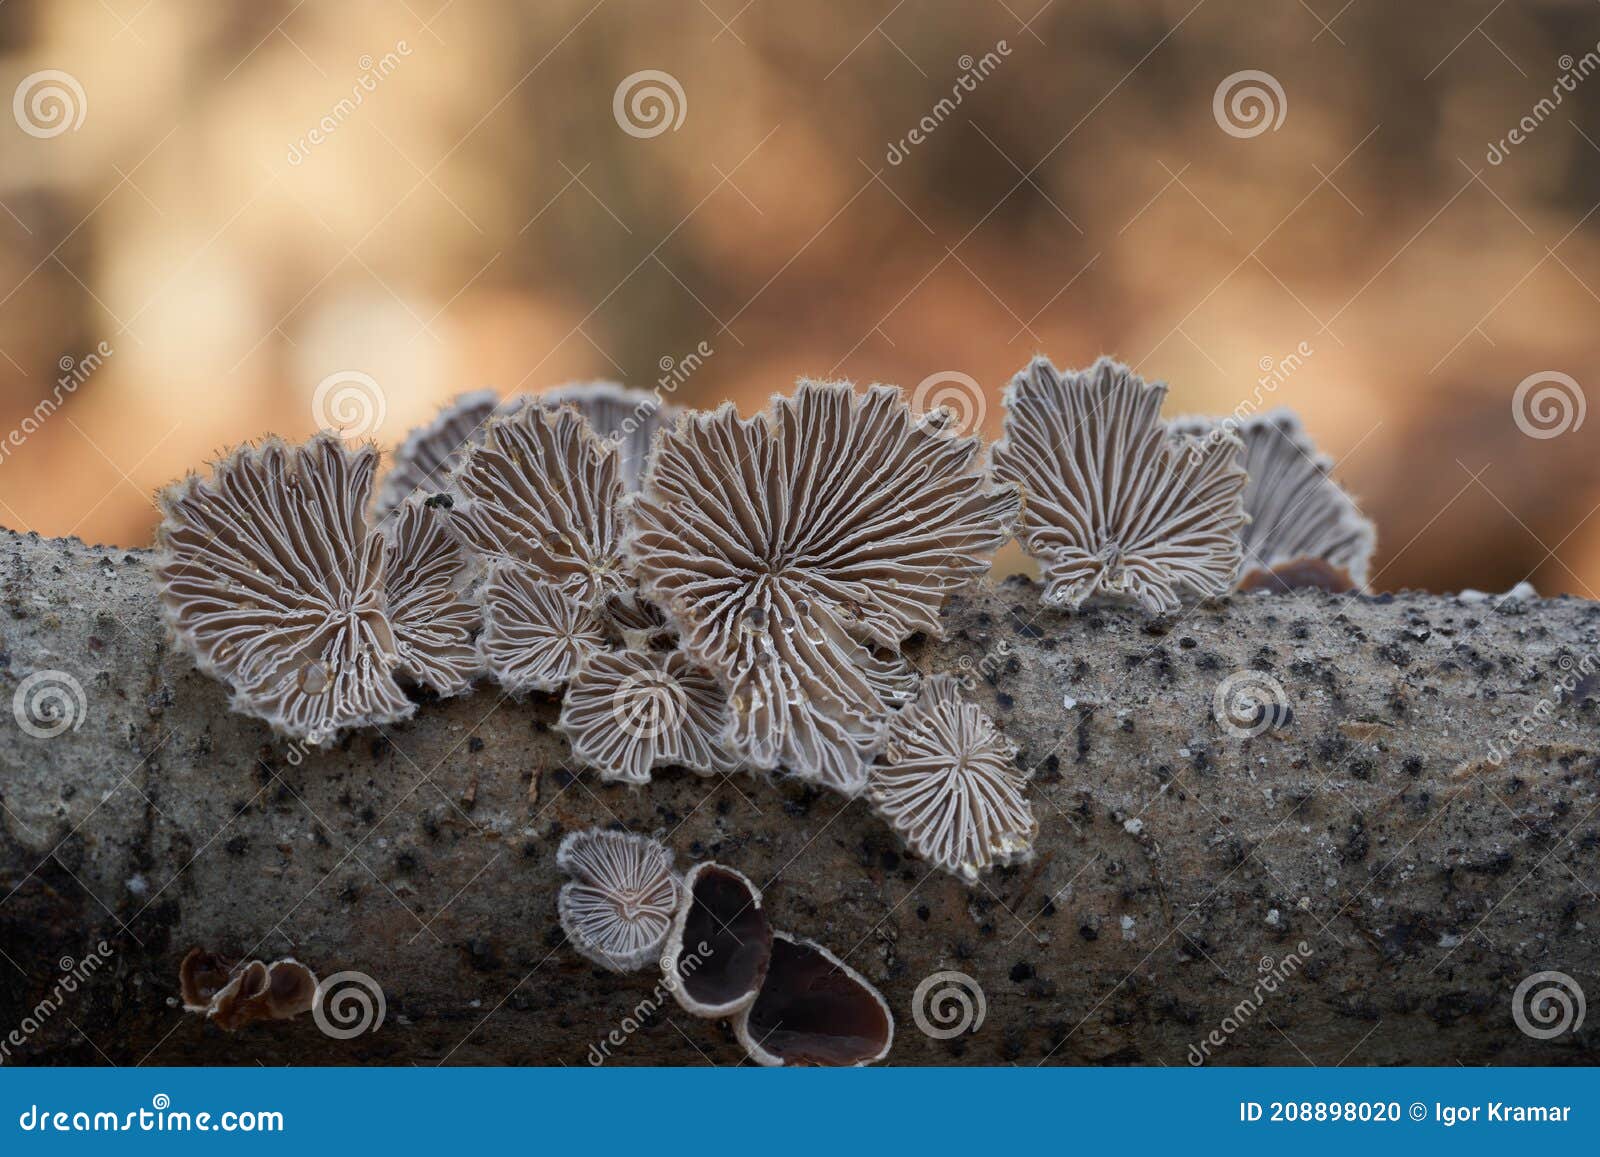 inedible mushroom schizophyllum commune in the floodplain forest.